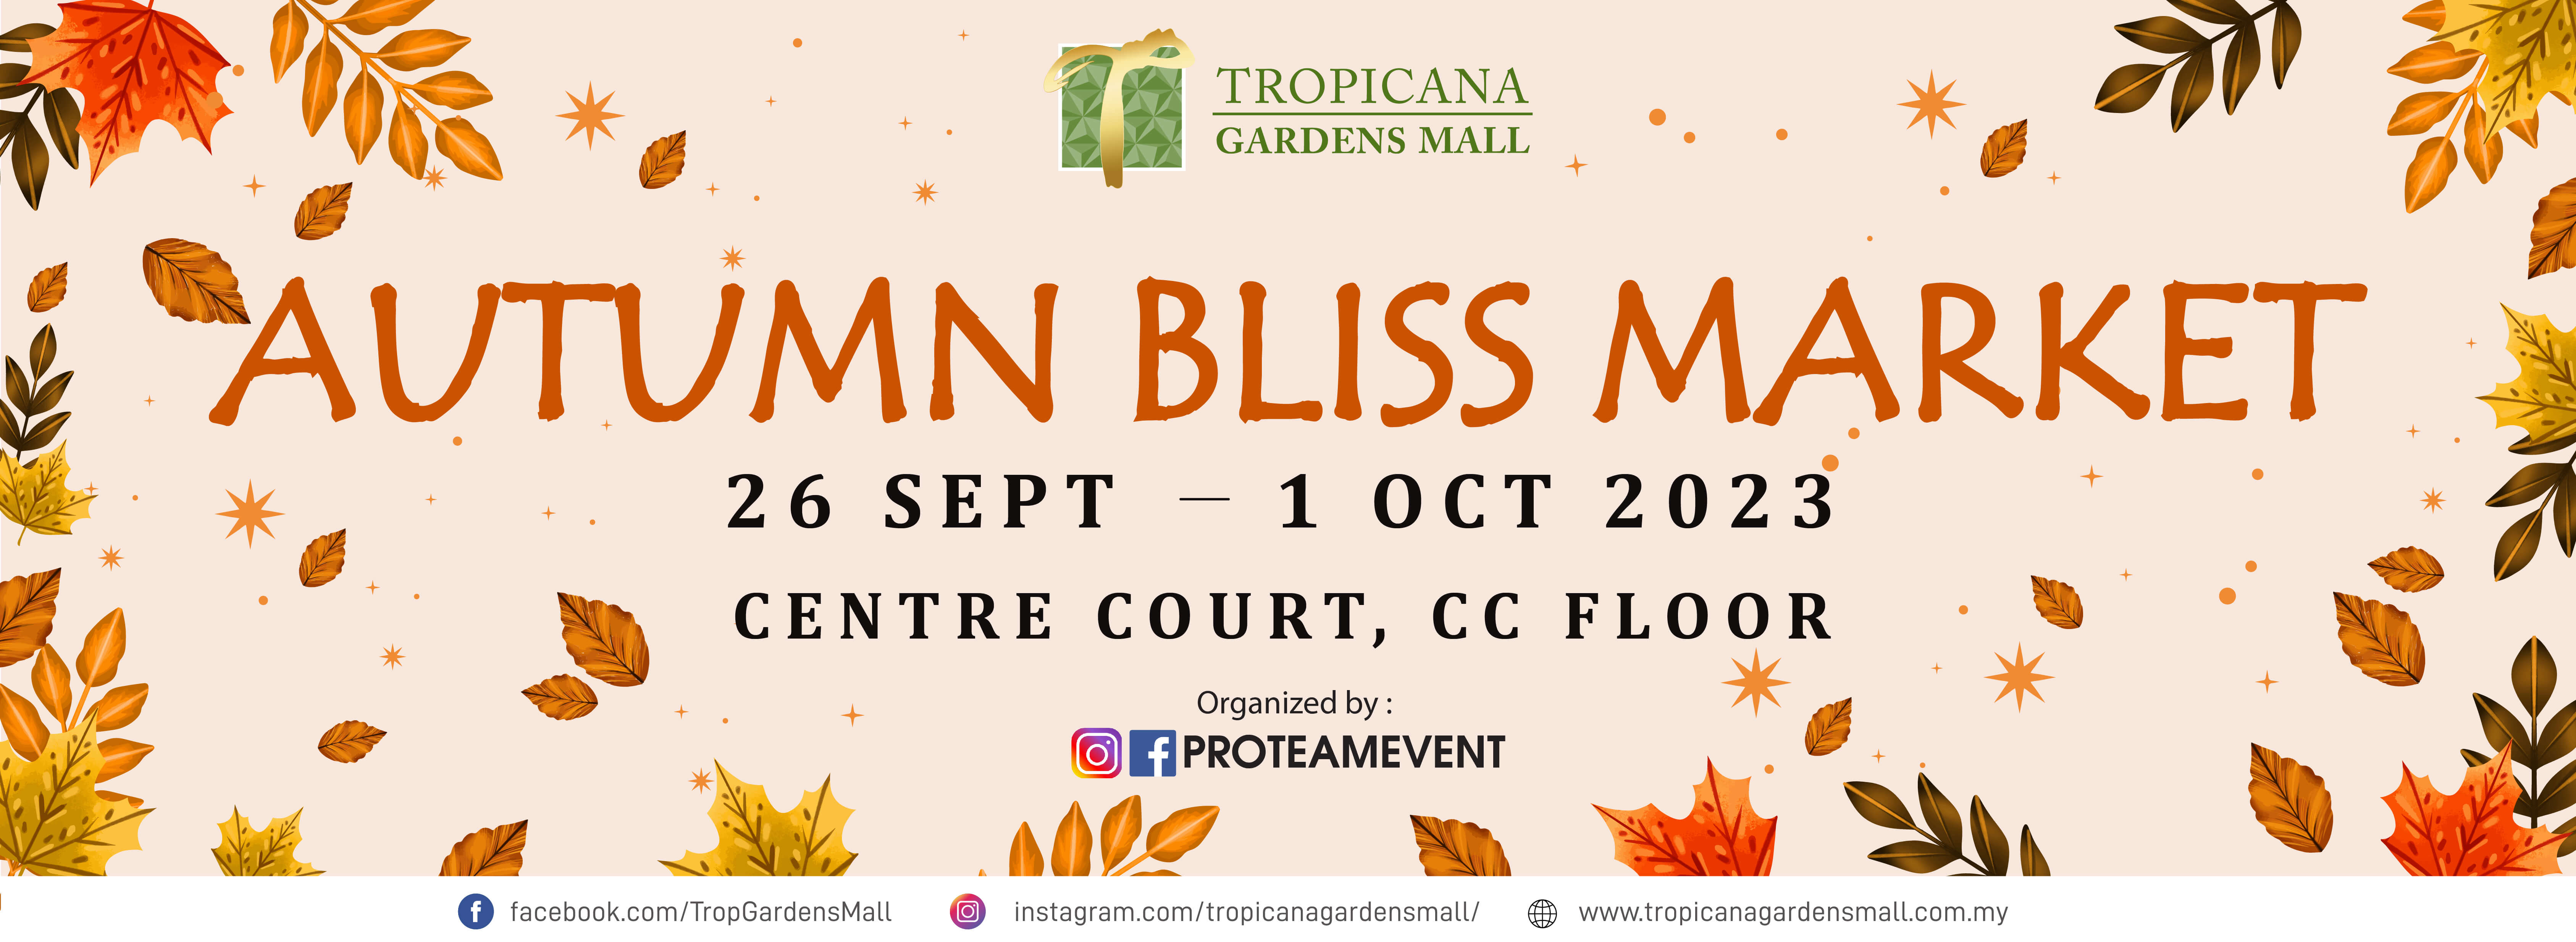 Tropicana Gardens Mall Autumn Bliss Market